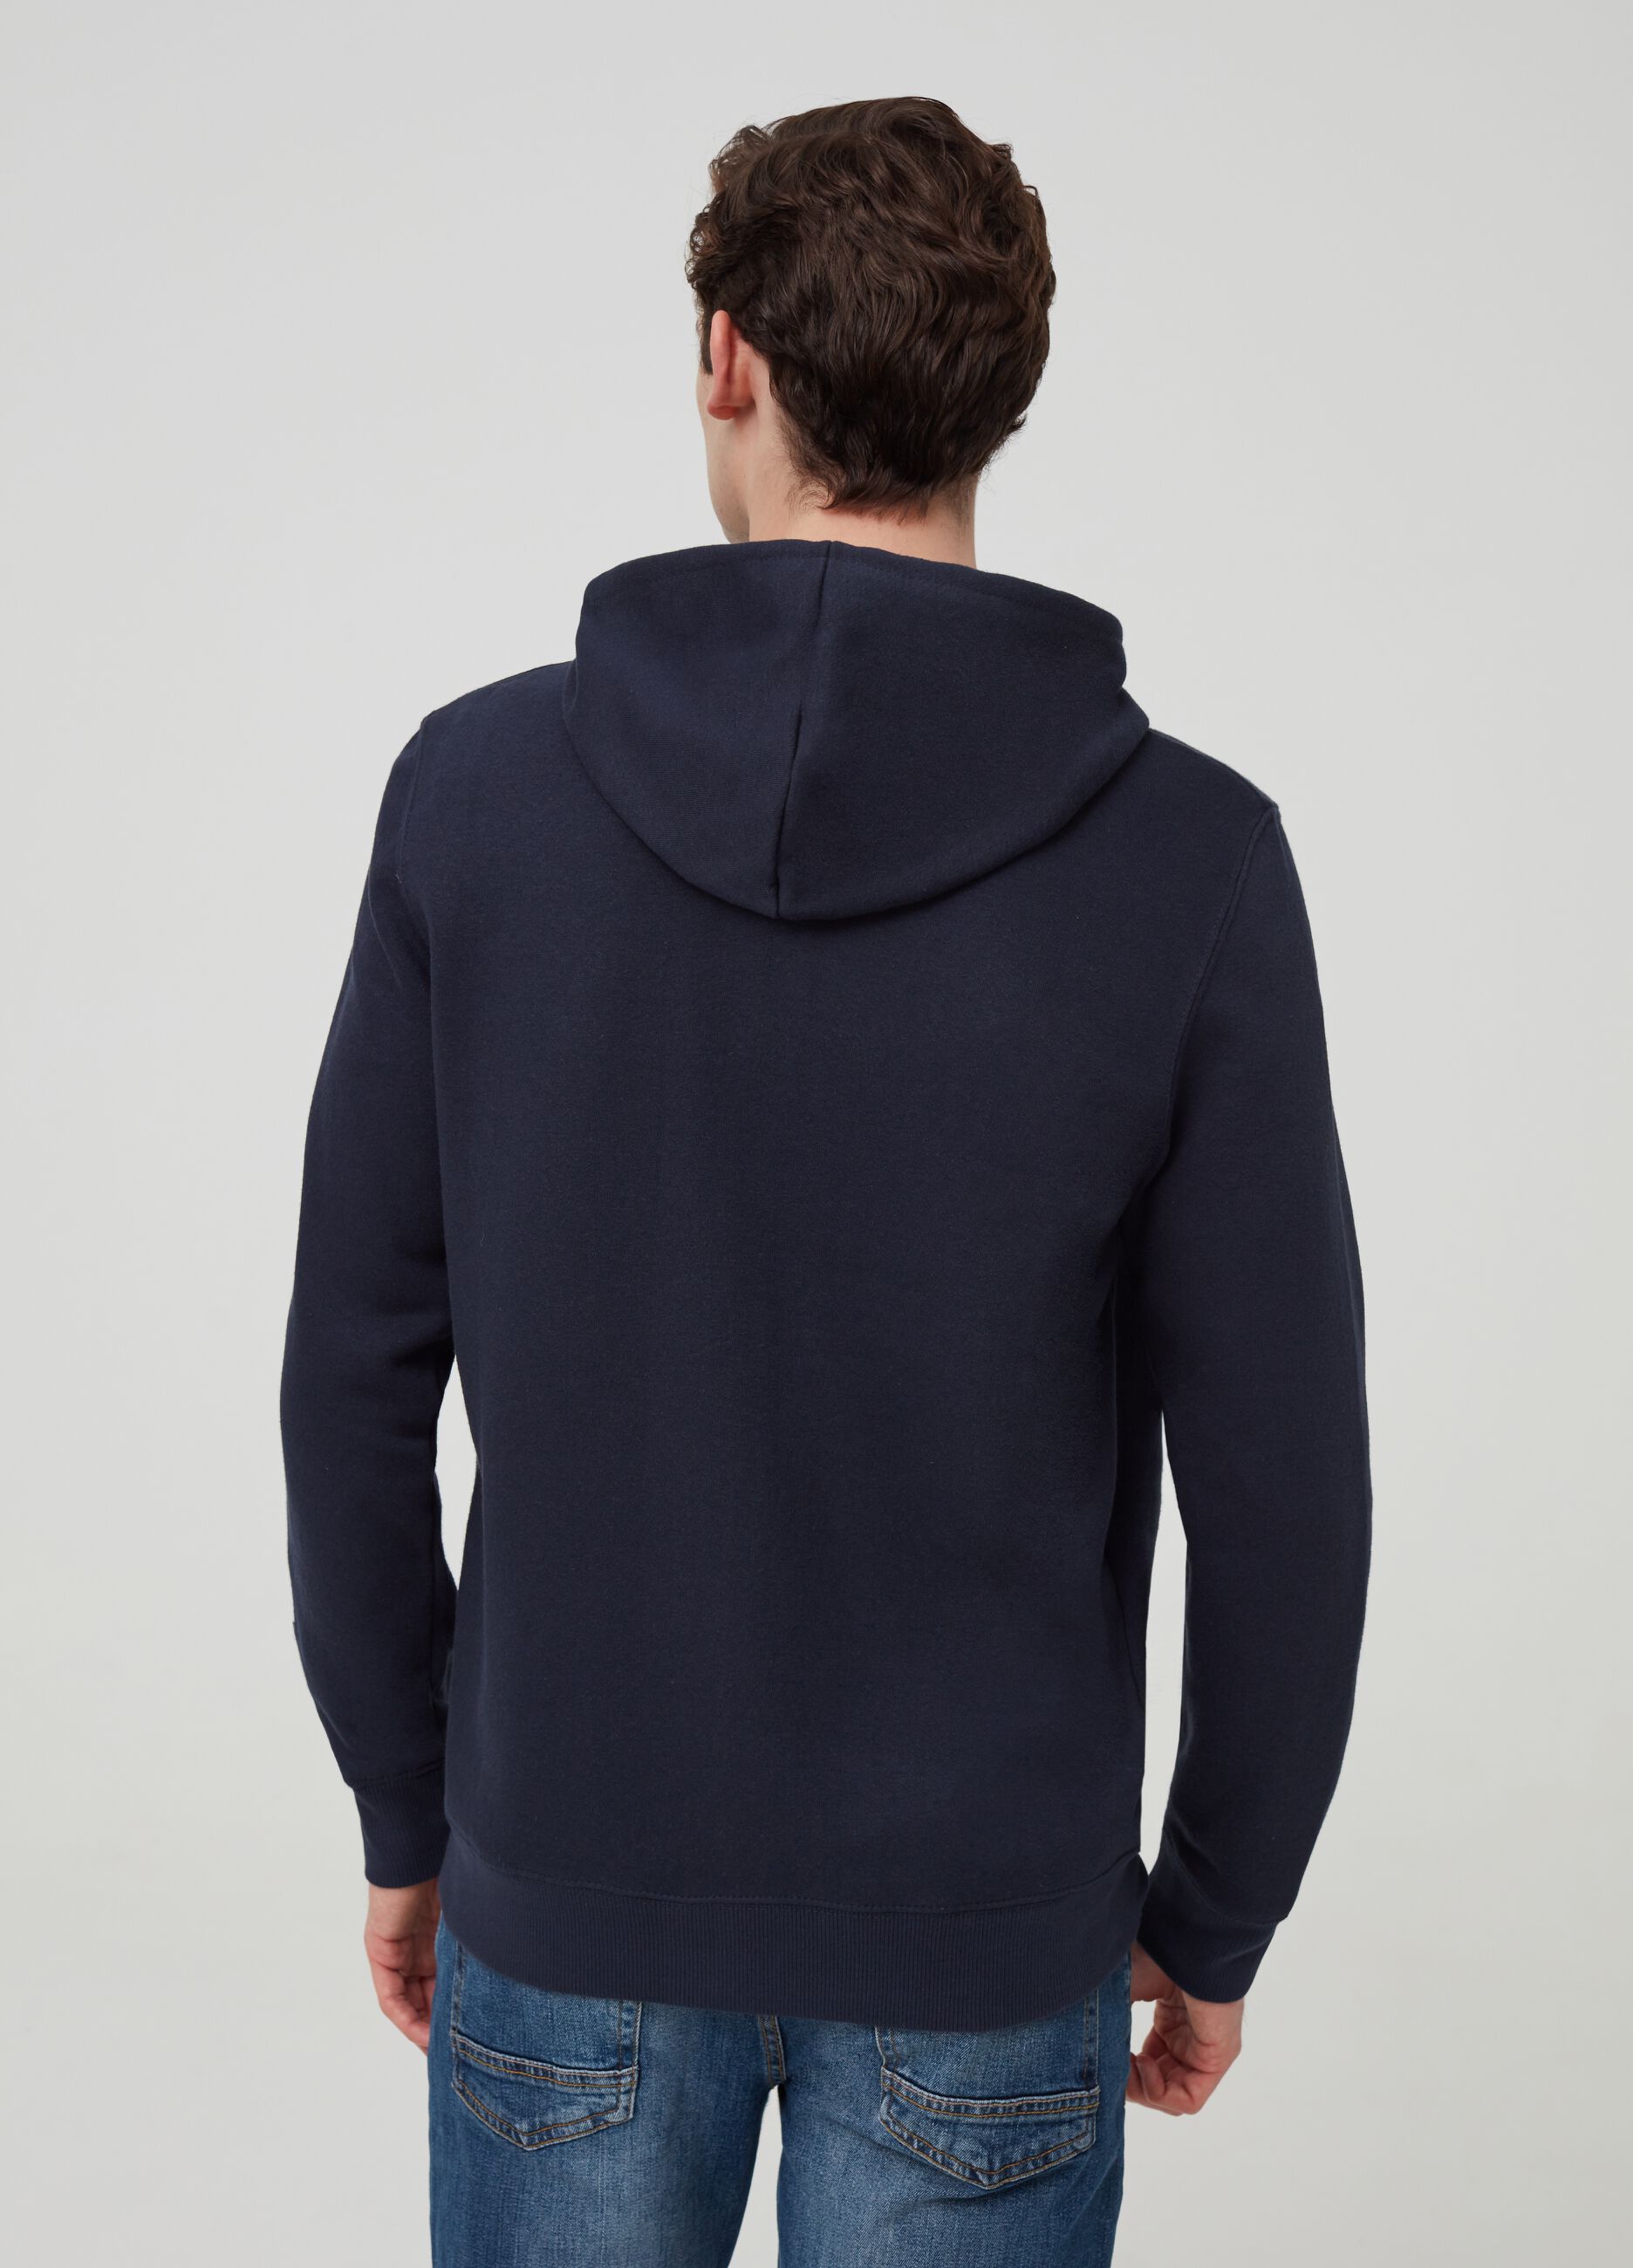 Full-zip sweatshirt with hood and NFL print